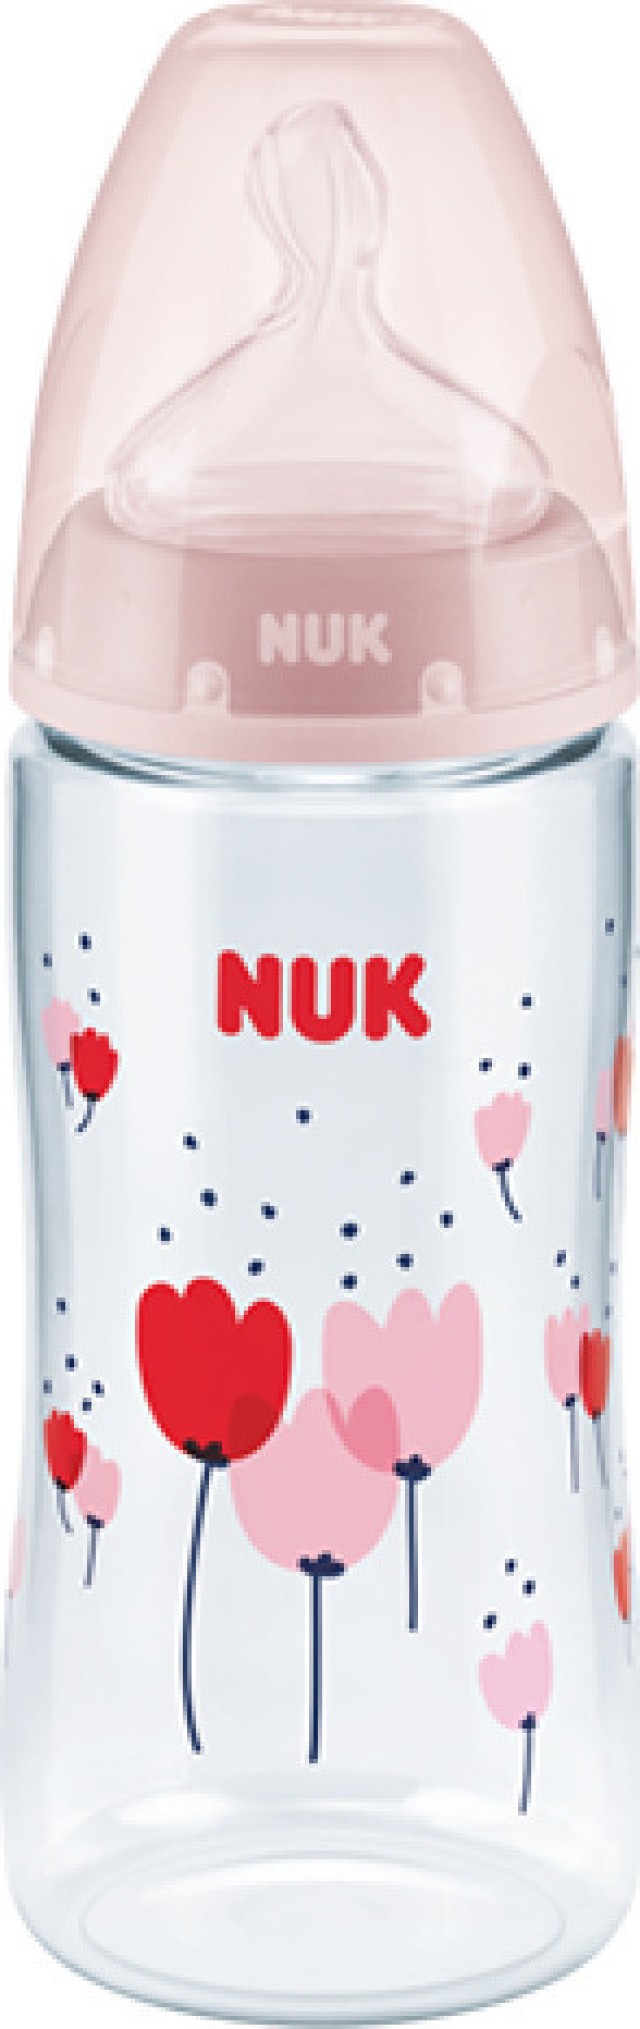 NUK Μπιμπερό Πλαστικό 6-18m First Choice+ Με Θηλή Σιλικόνης & Δείκτη Ελέγχου Θερμοκρασίας Ροζ Με Τουλίπες  (10.741.940), 300ml